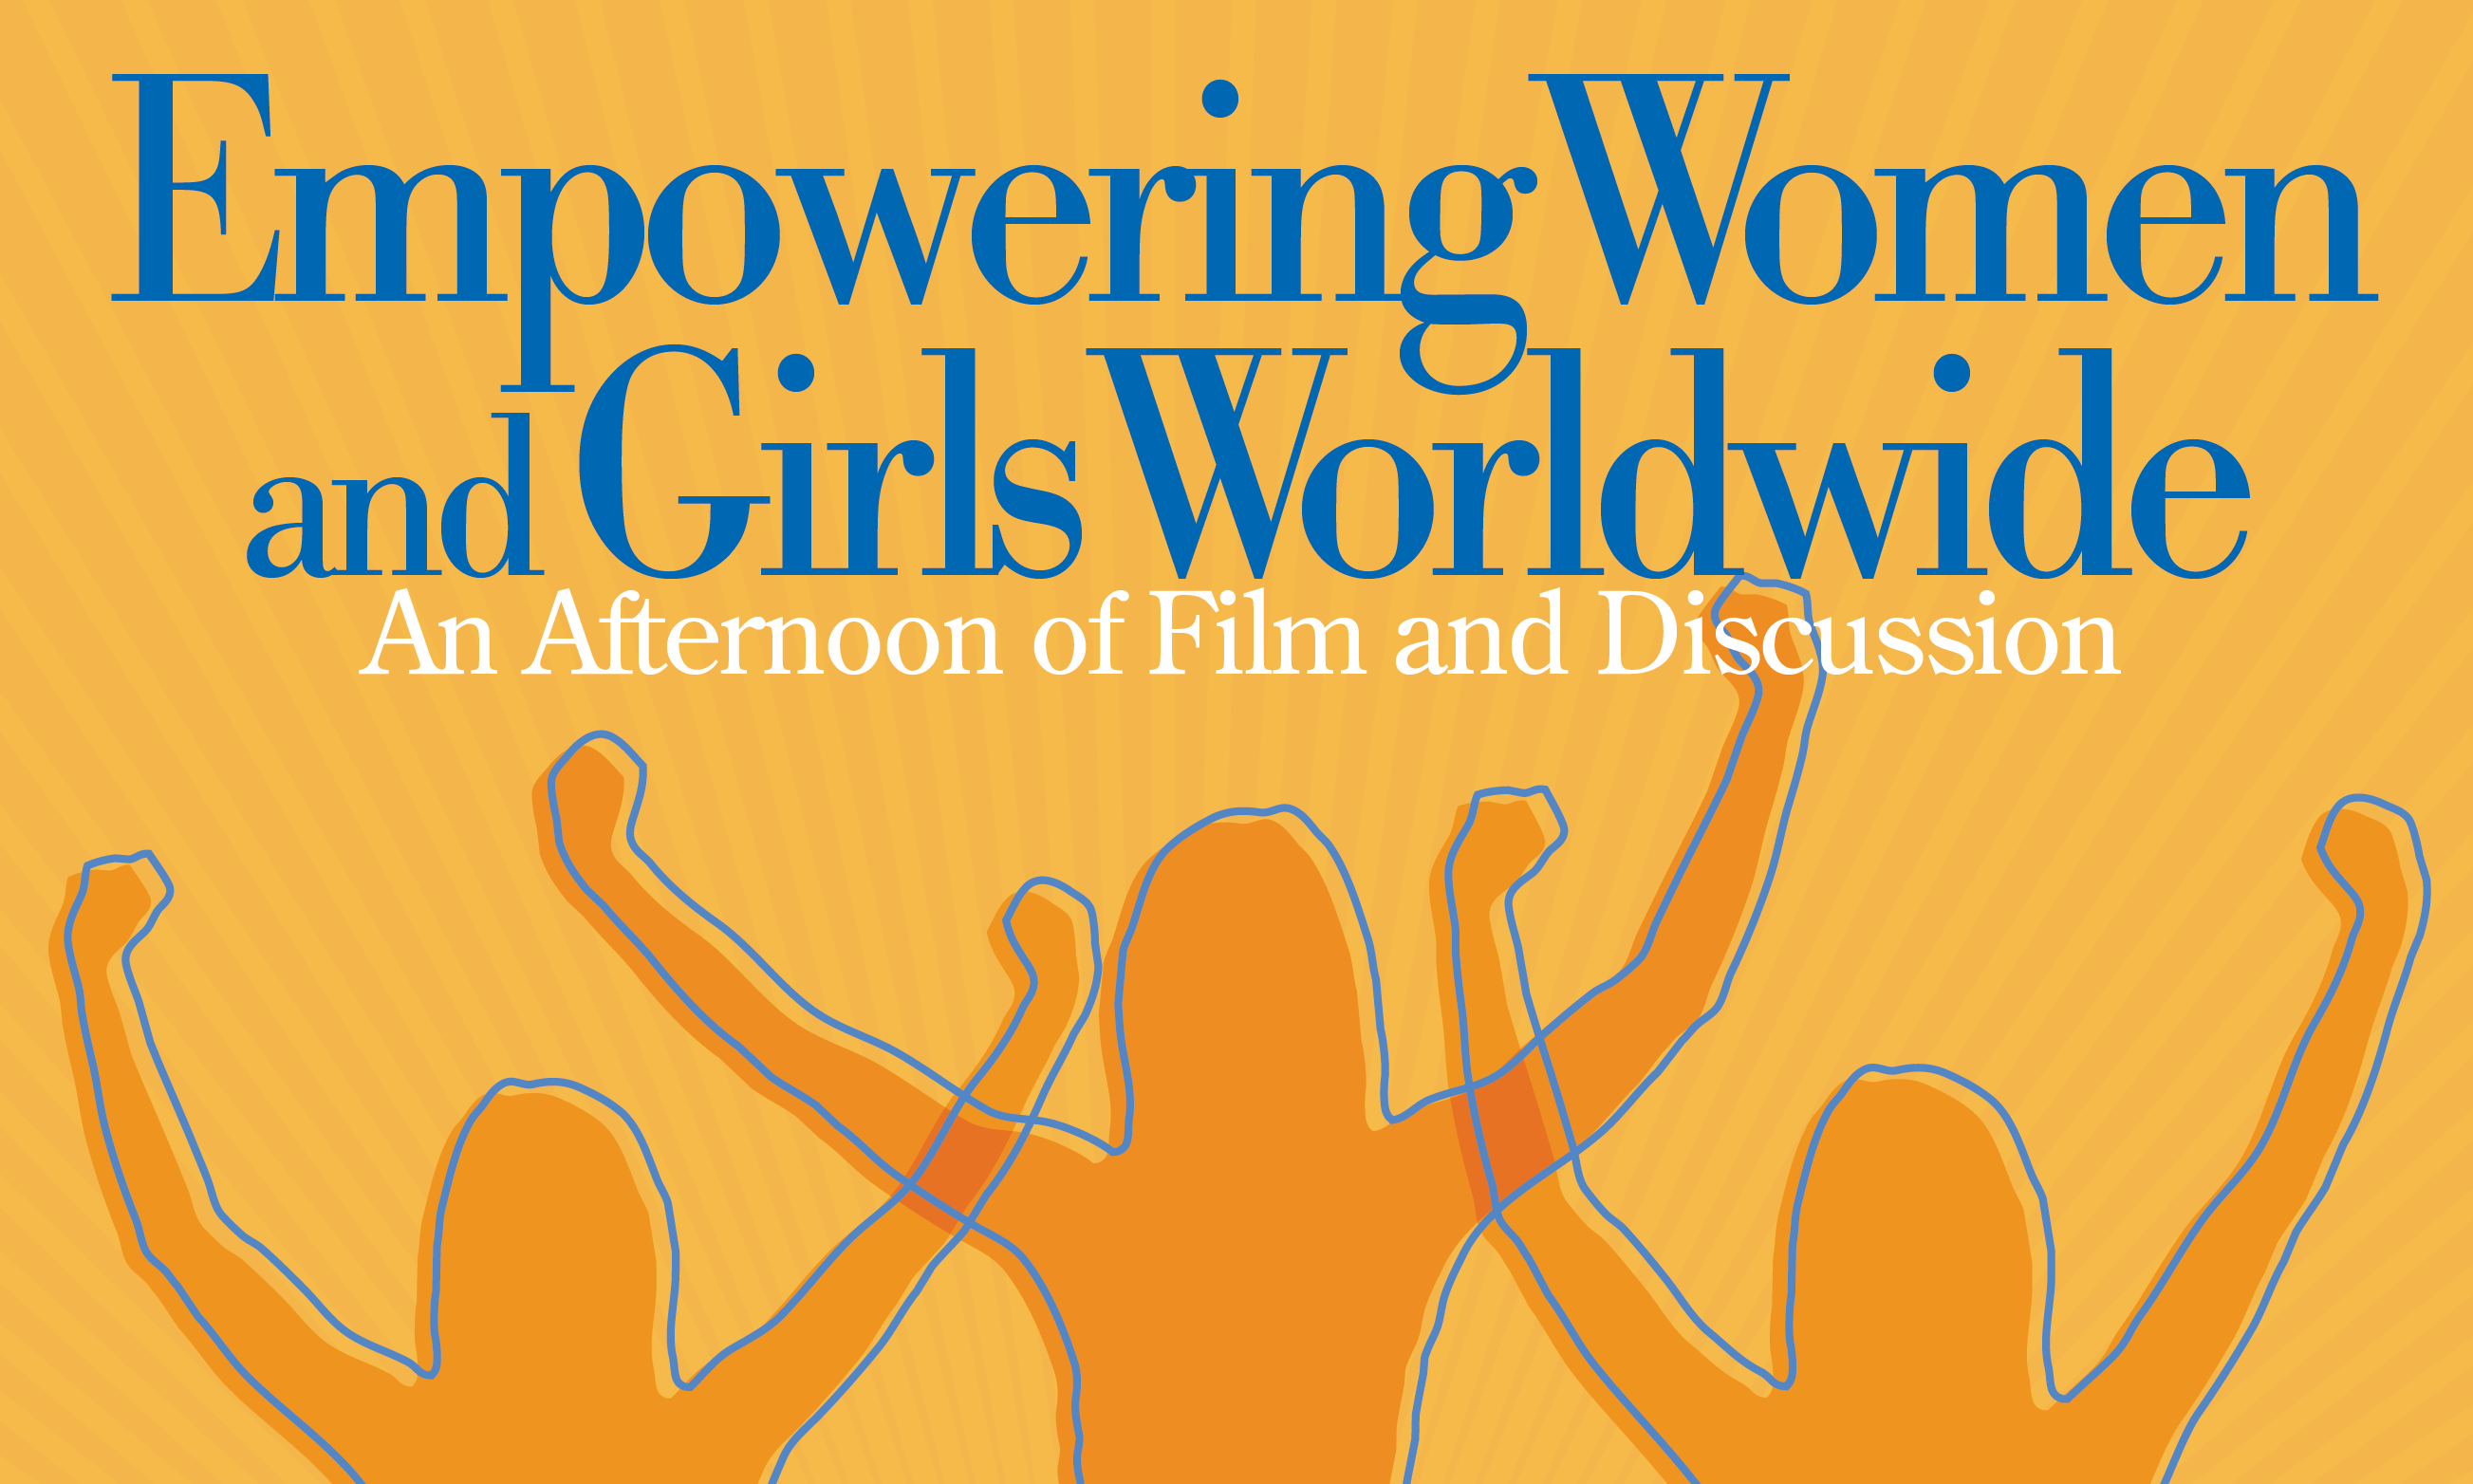 Conversations with Neighbors: Empowering Women and Girls Worldwide